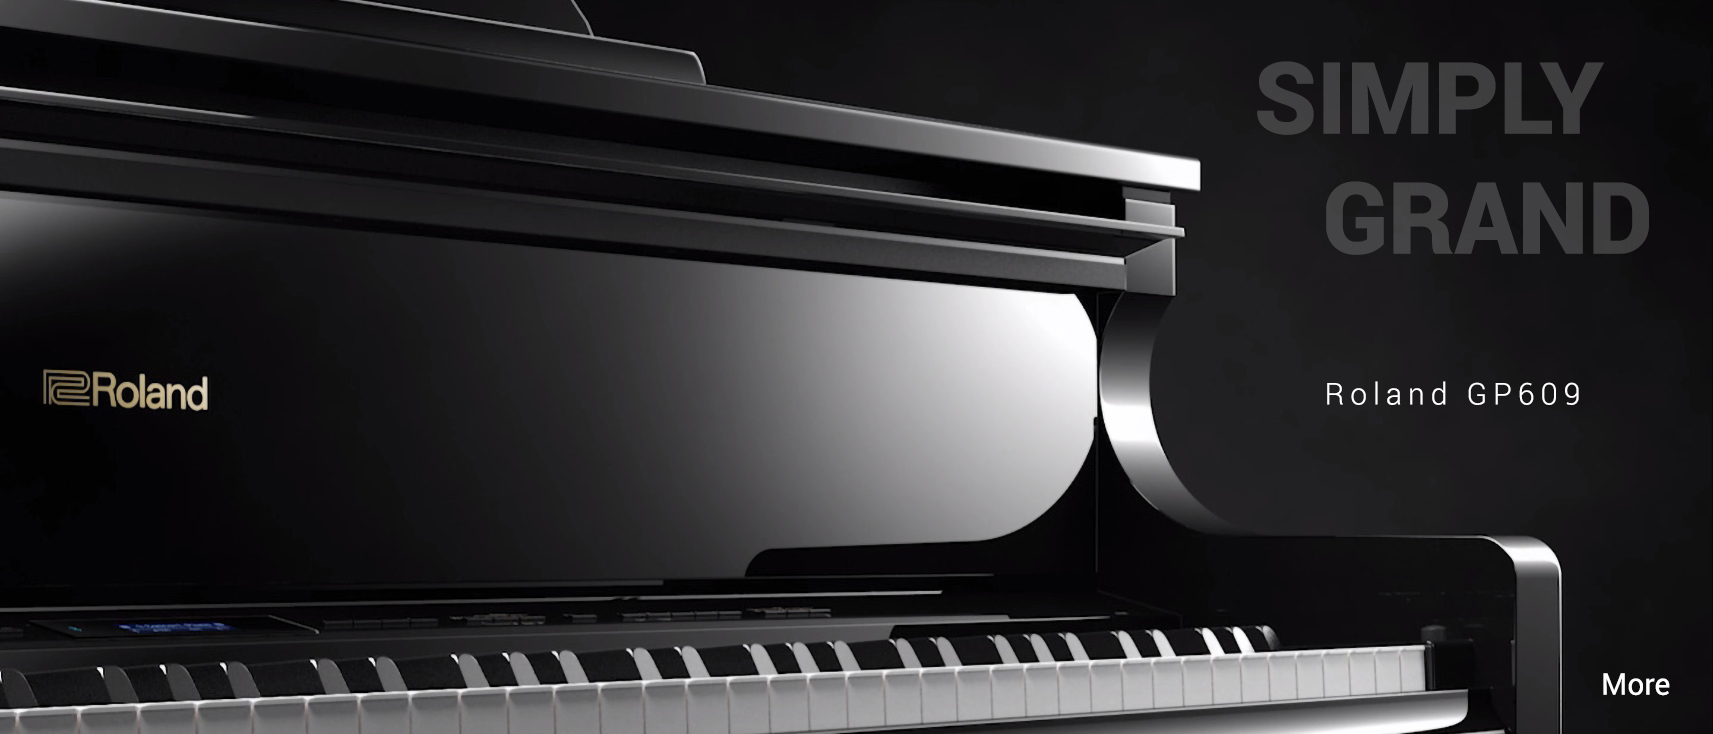 The Roland GP609 digital grand piano